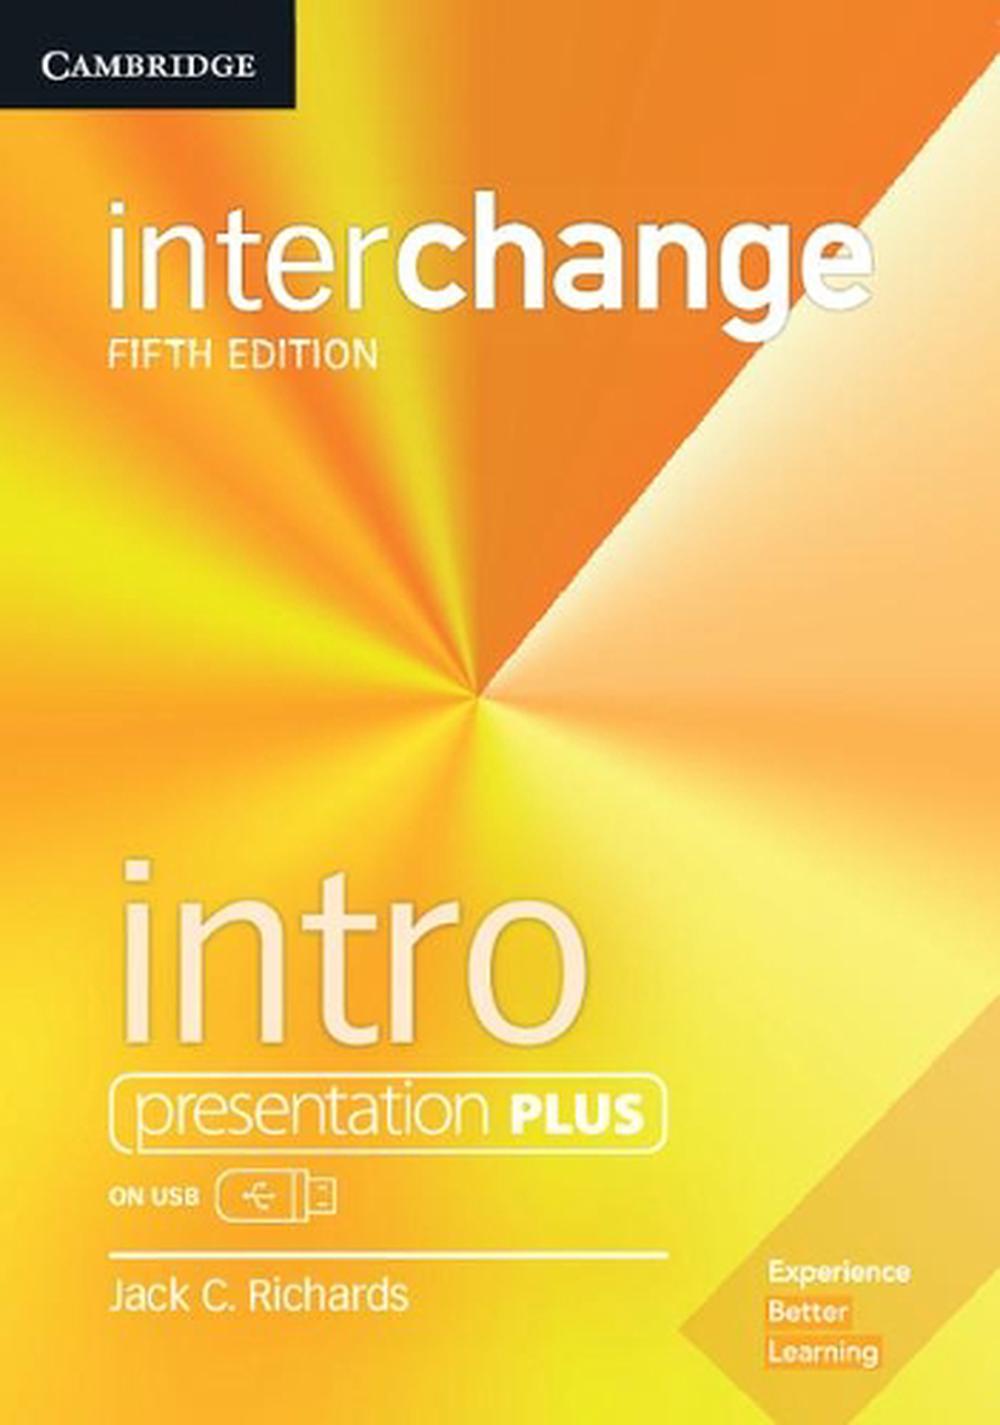 USB　9781108403047　Nile　at　Plus　Jack　online　Presentation　Intro　Buy　The　C.　by　Interchange　Richards,